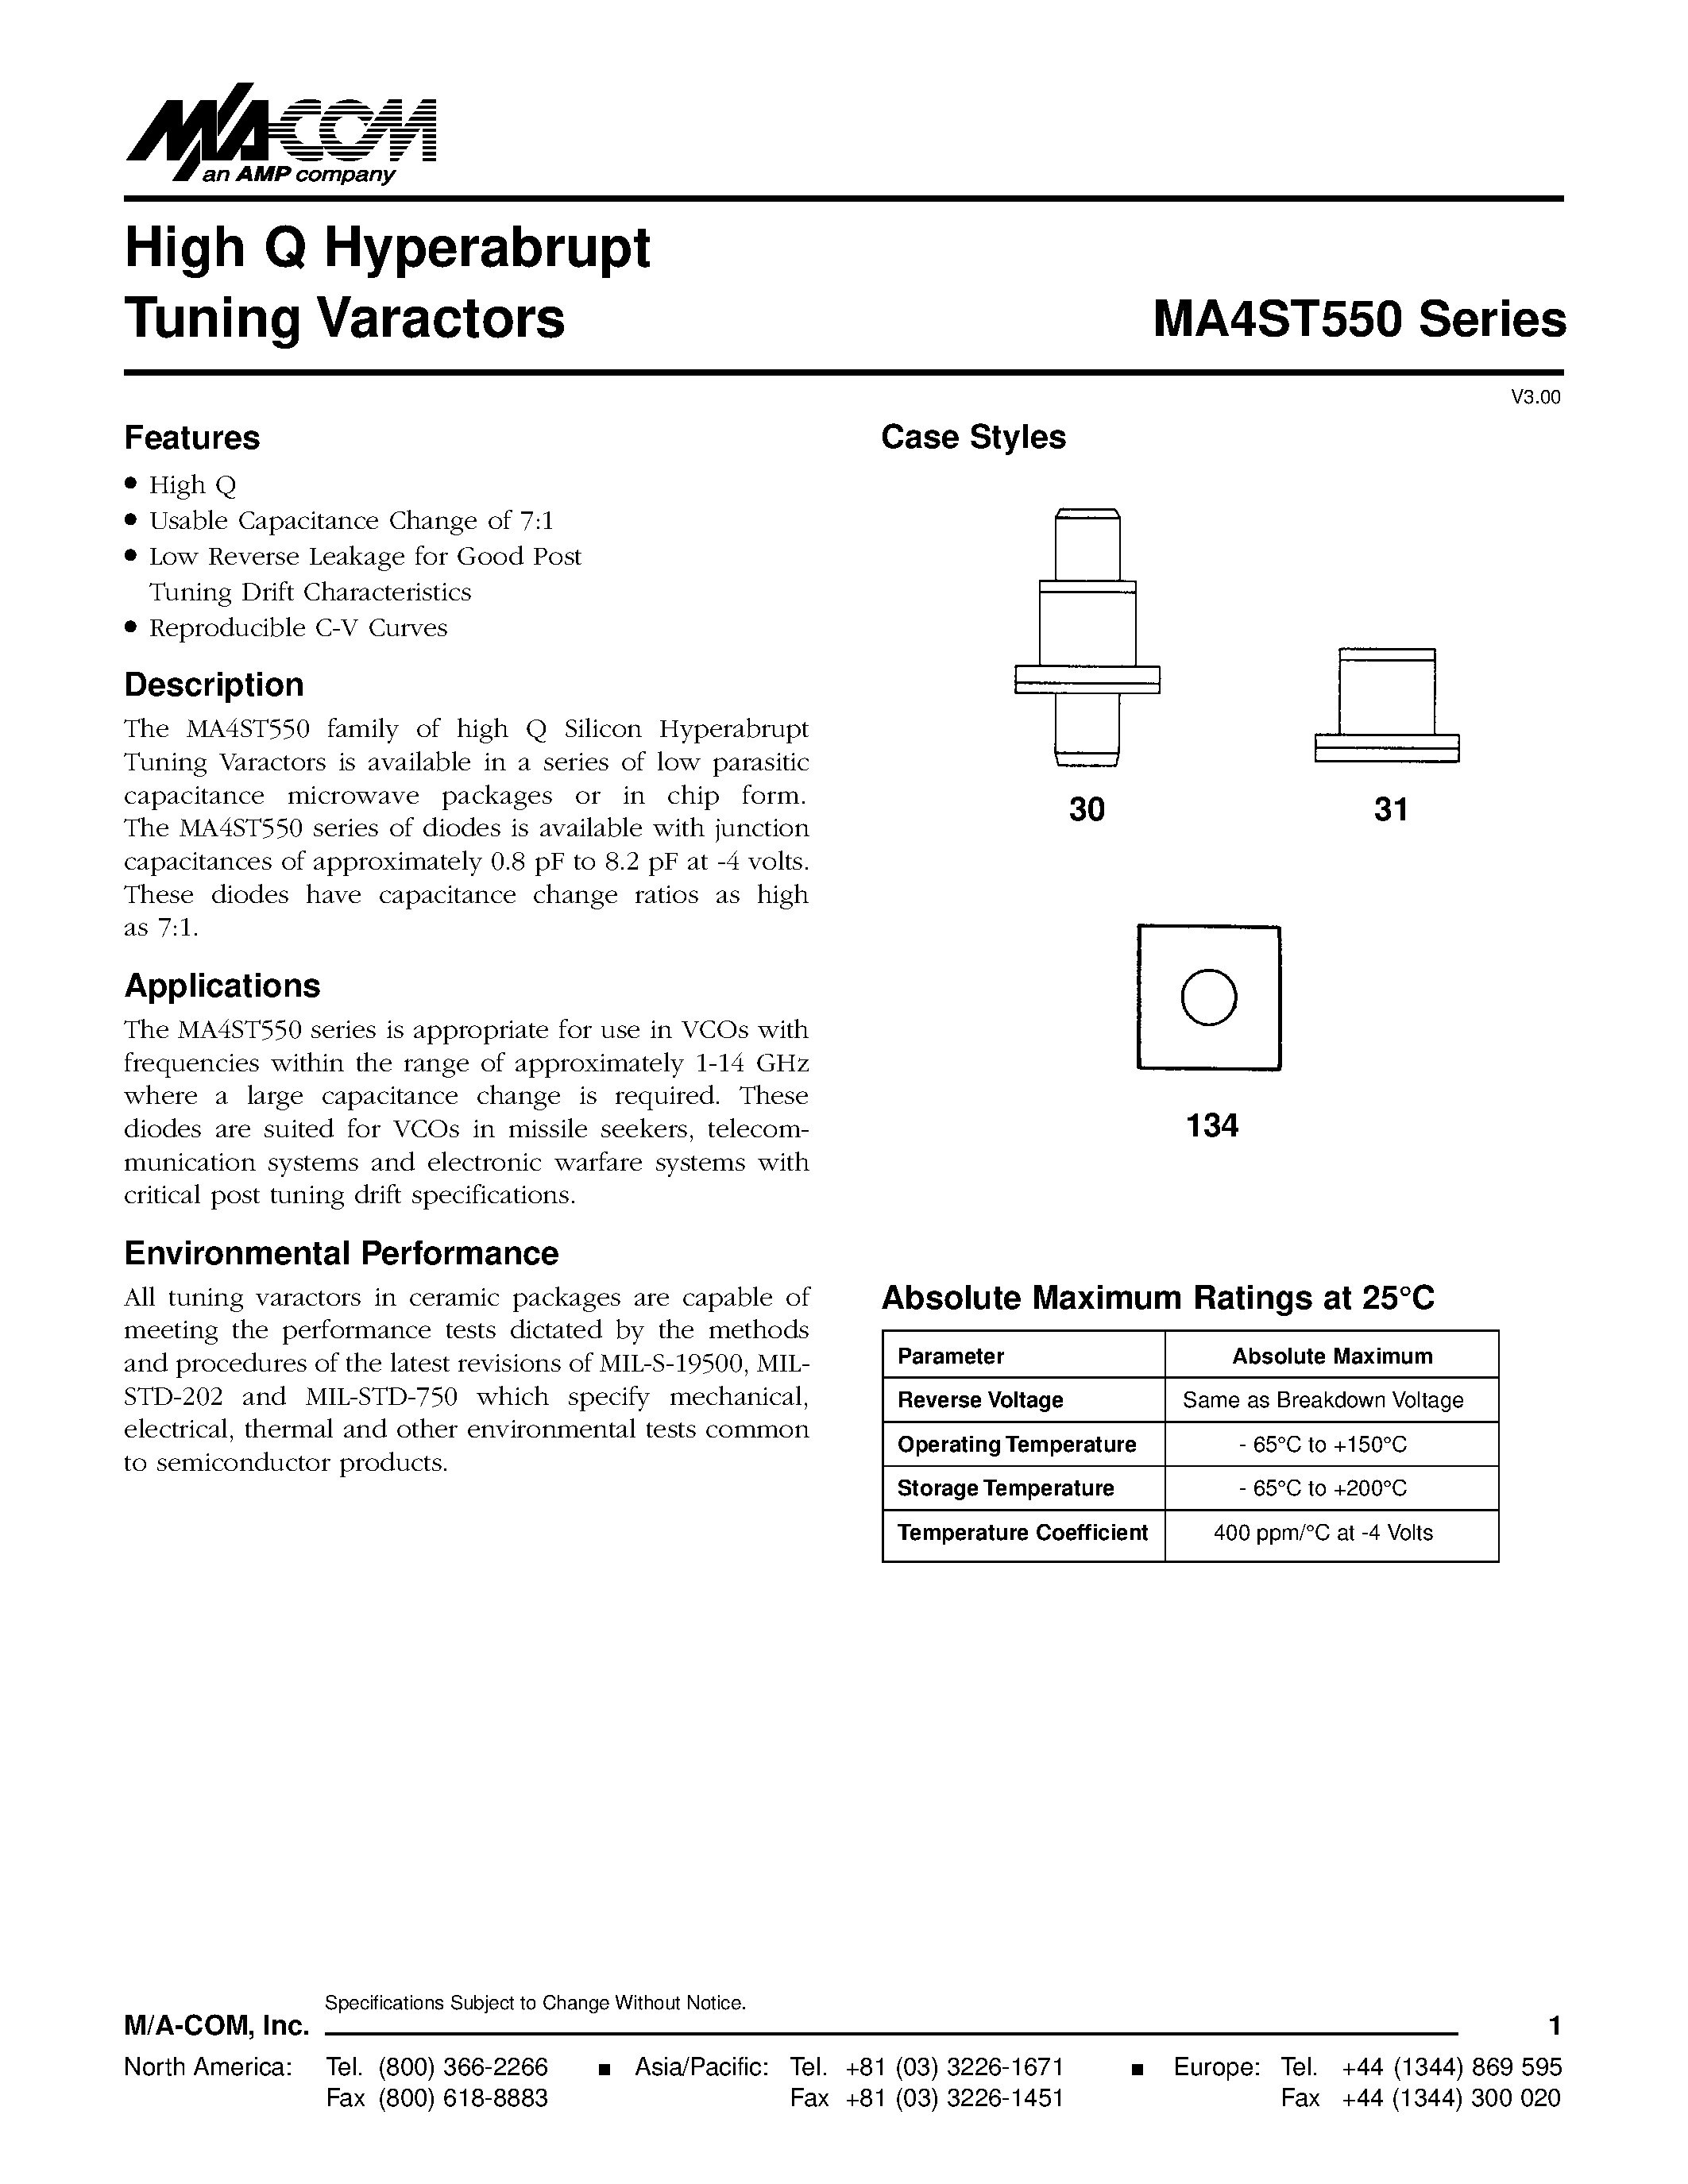 Datasheet MA4ST560 - High Q Hyperabrupt Tuning Varactors page 1